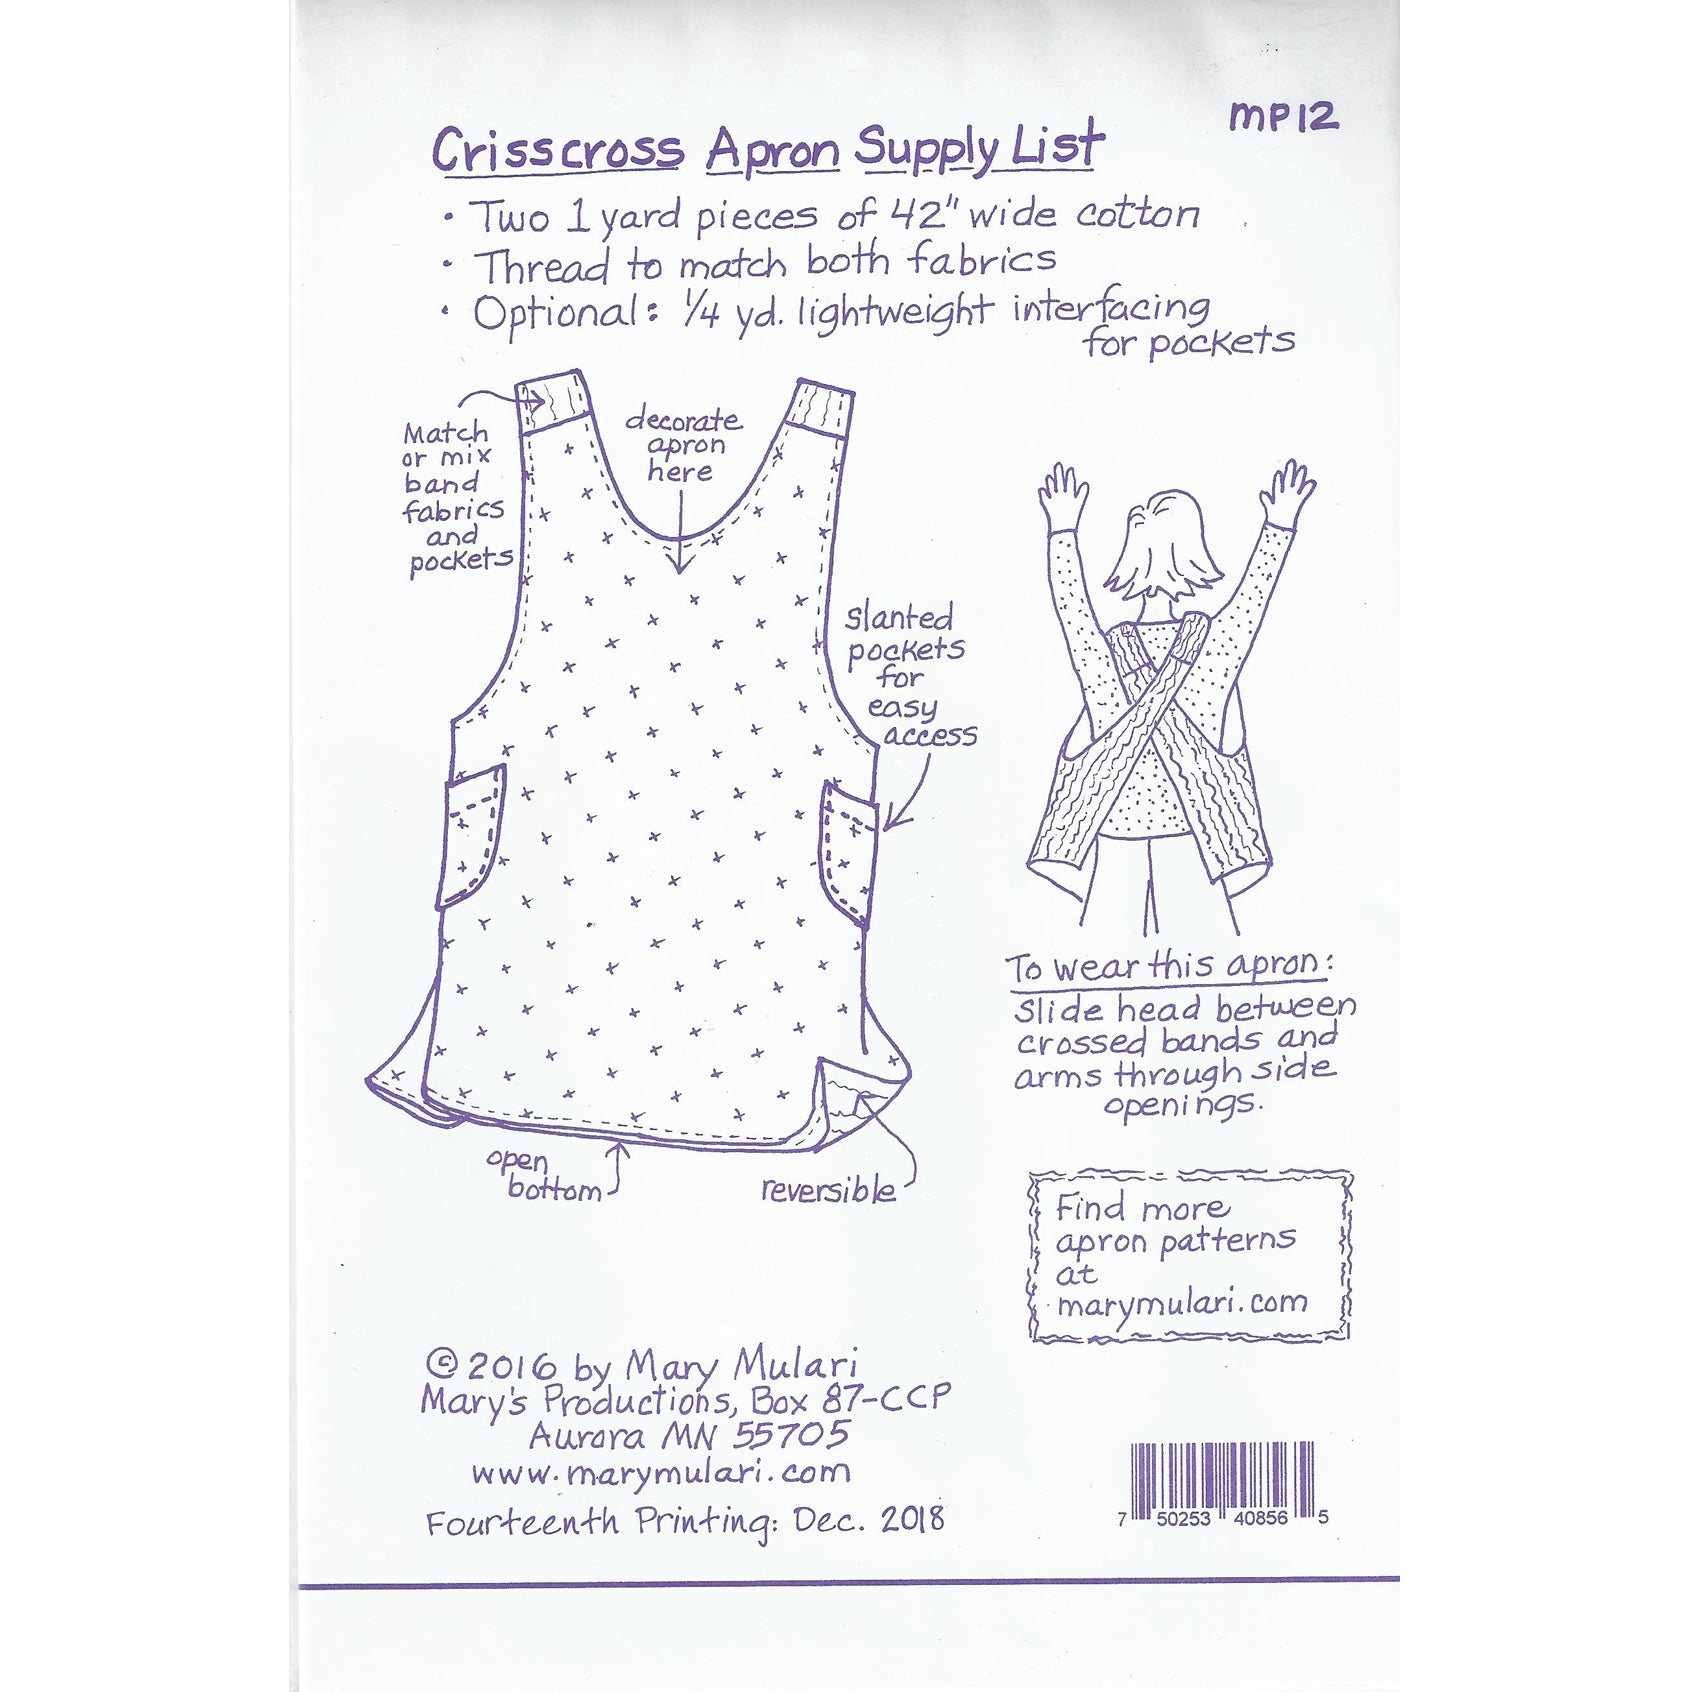 DIY 1 Piece Criss Cross Back Apron Dress Sewing Tutorial 